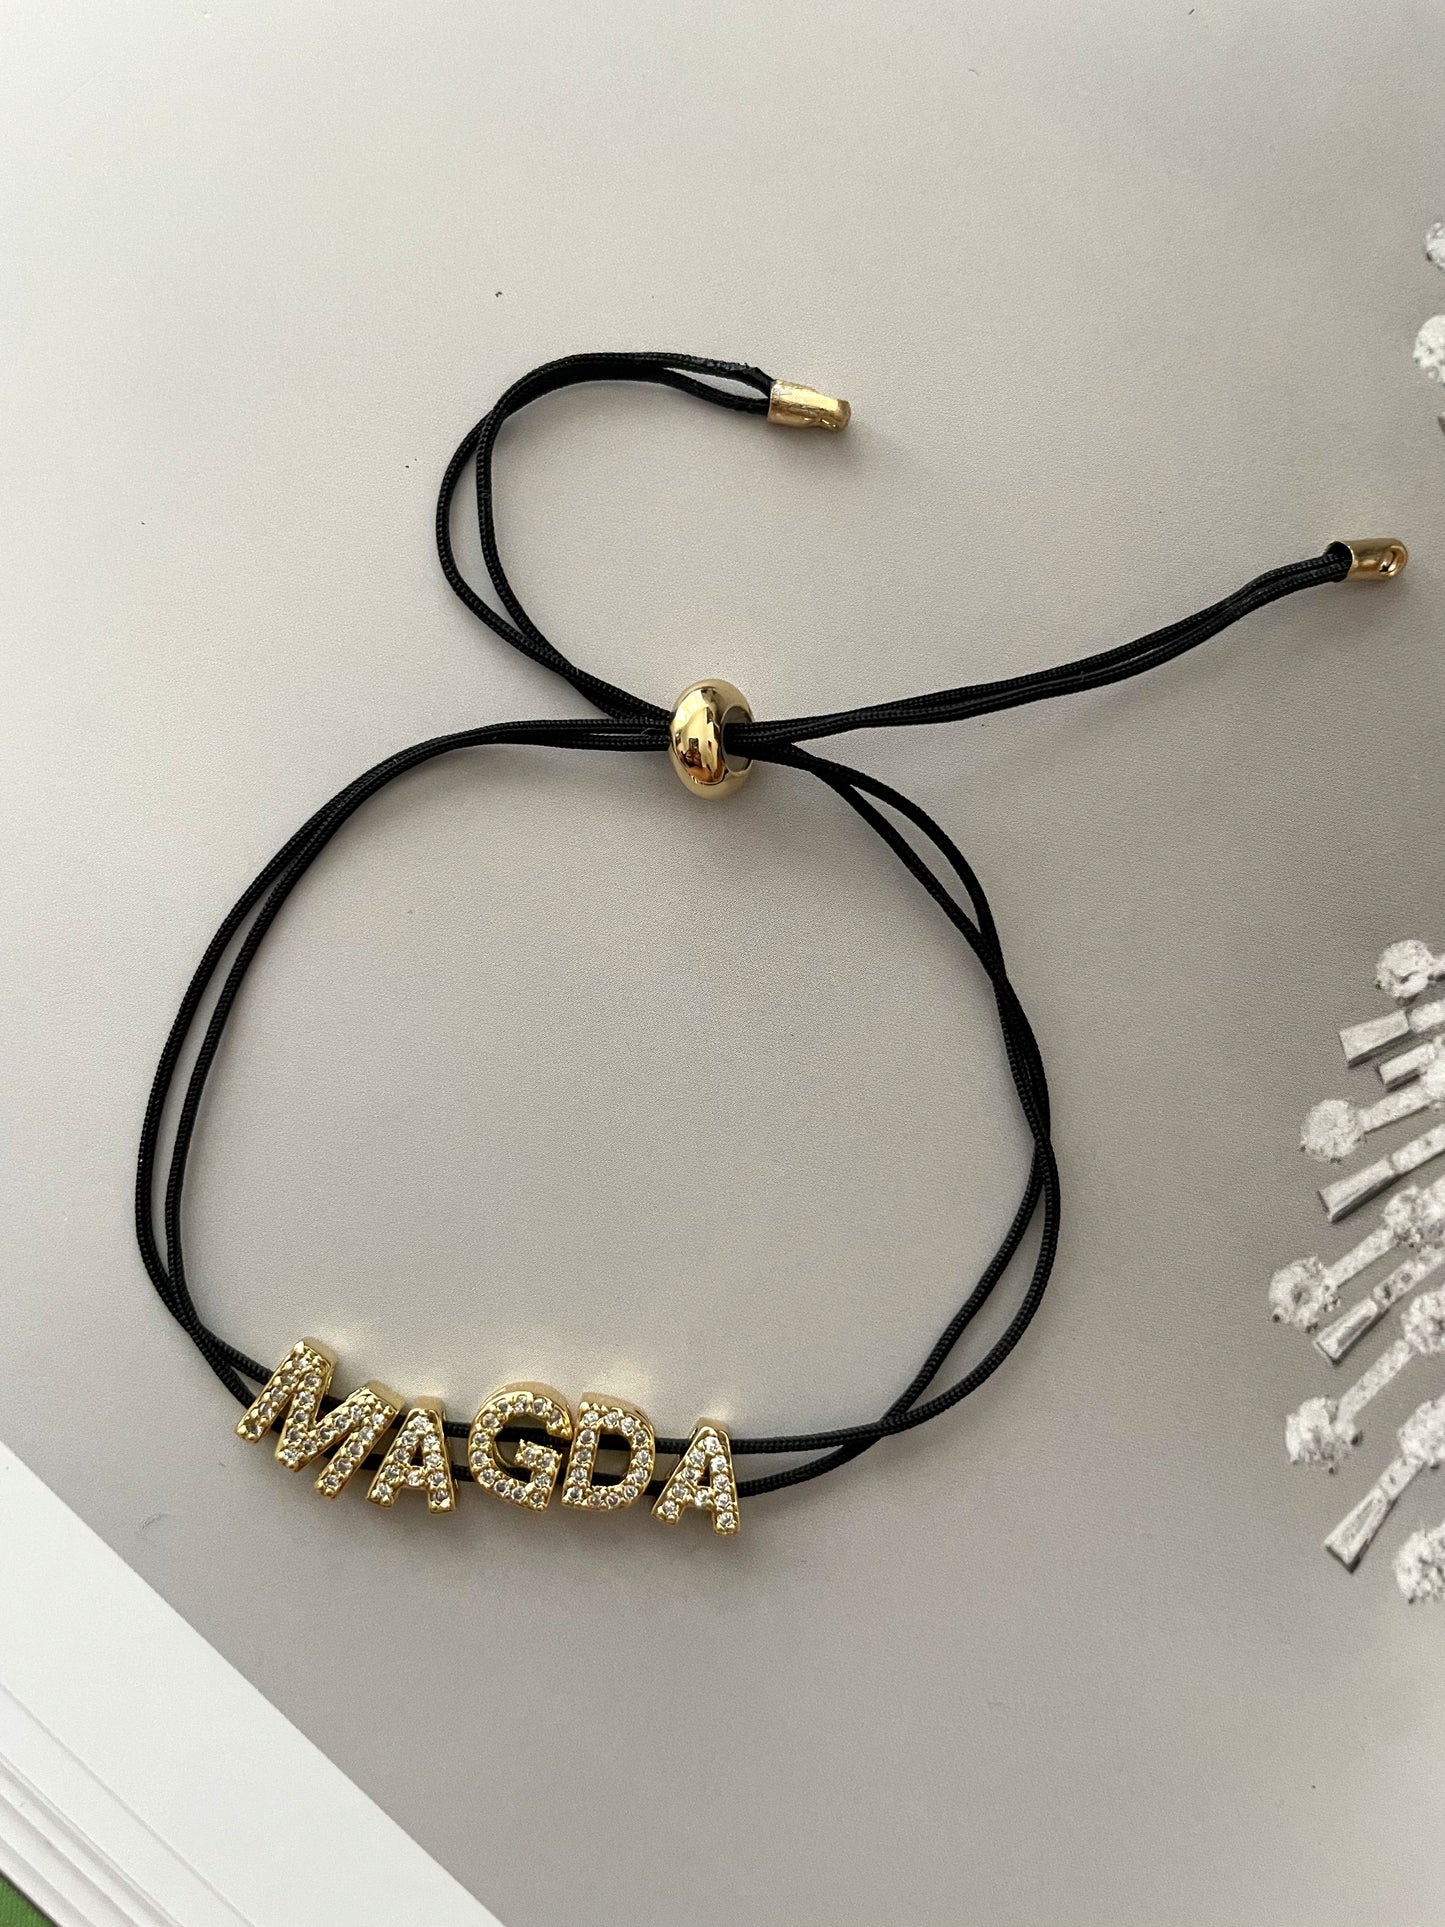 Custom cord bracelet